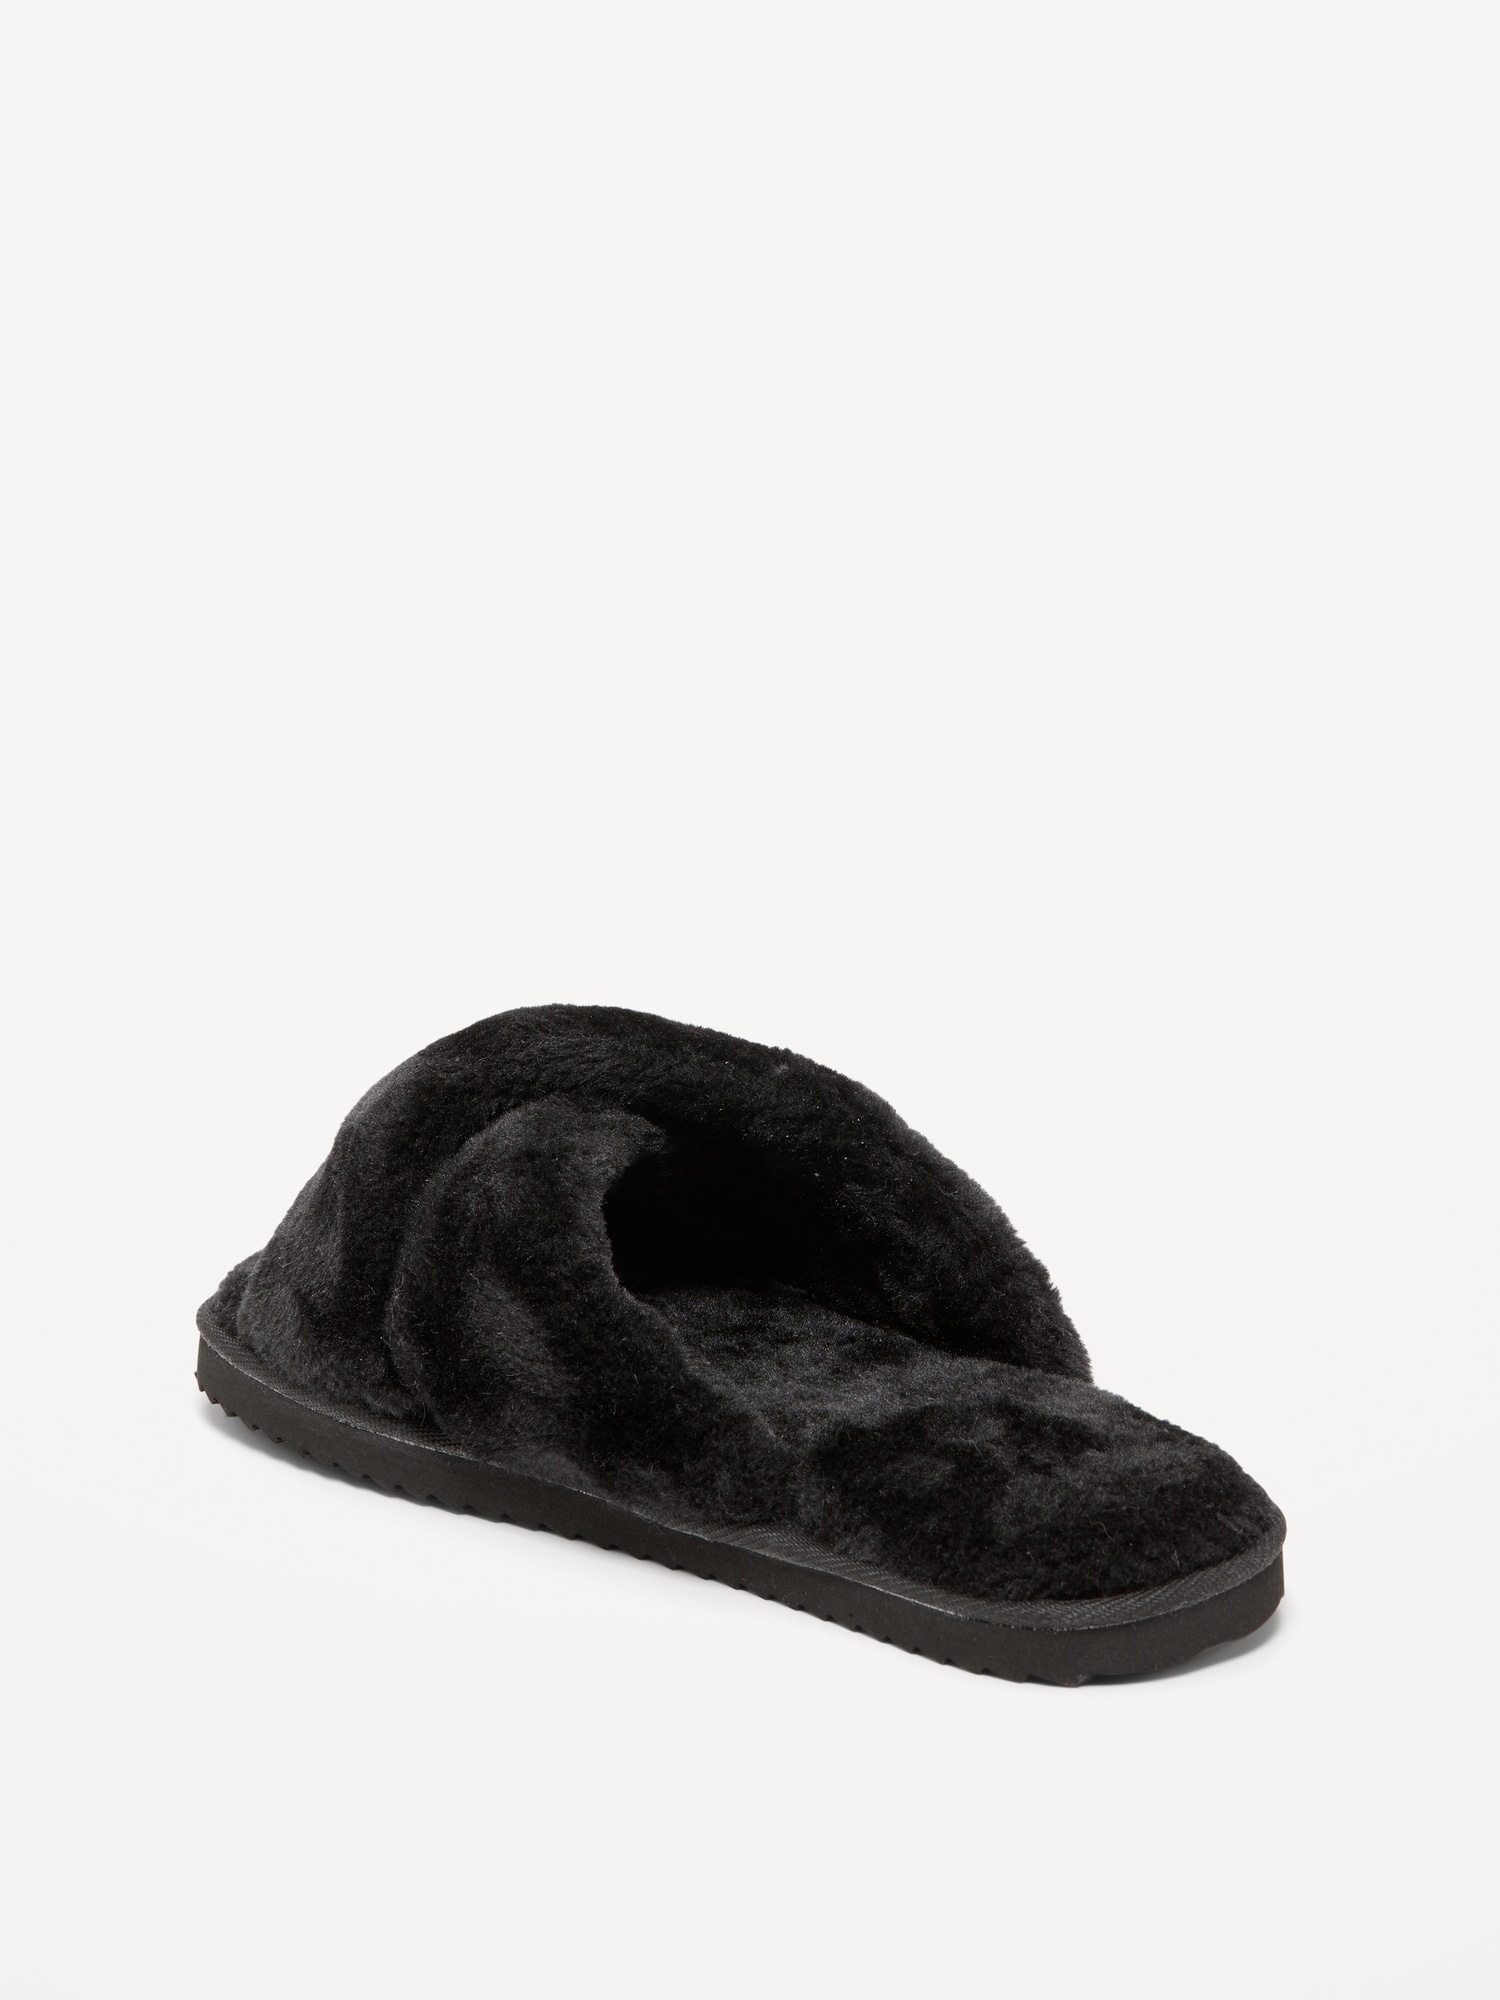 Cozy Faux Fur Slide Slippers for Women | Old Navy